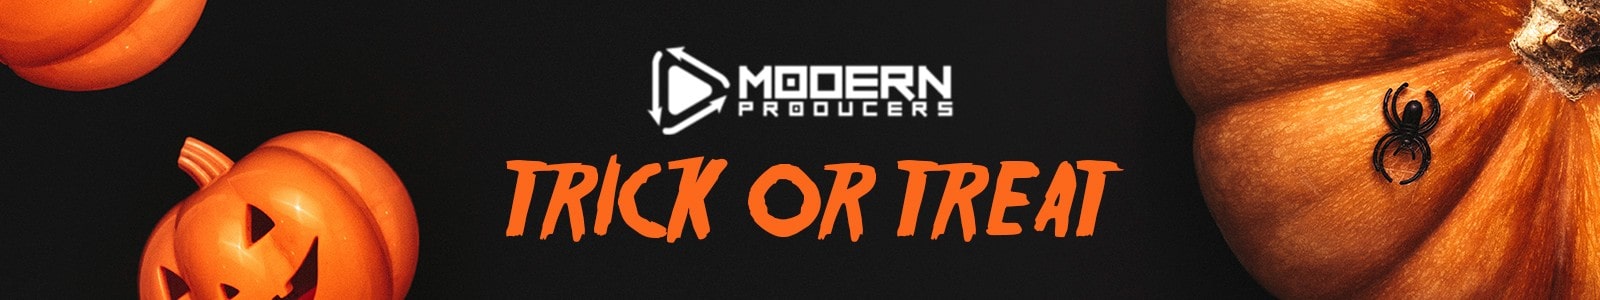 Trick or Treat VST Bundle by Modern Producers